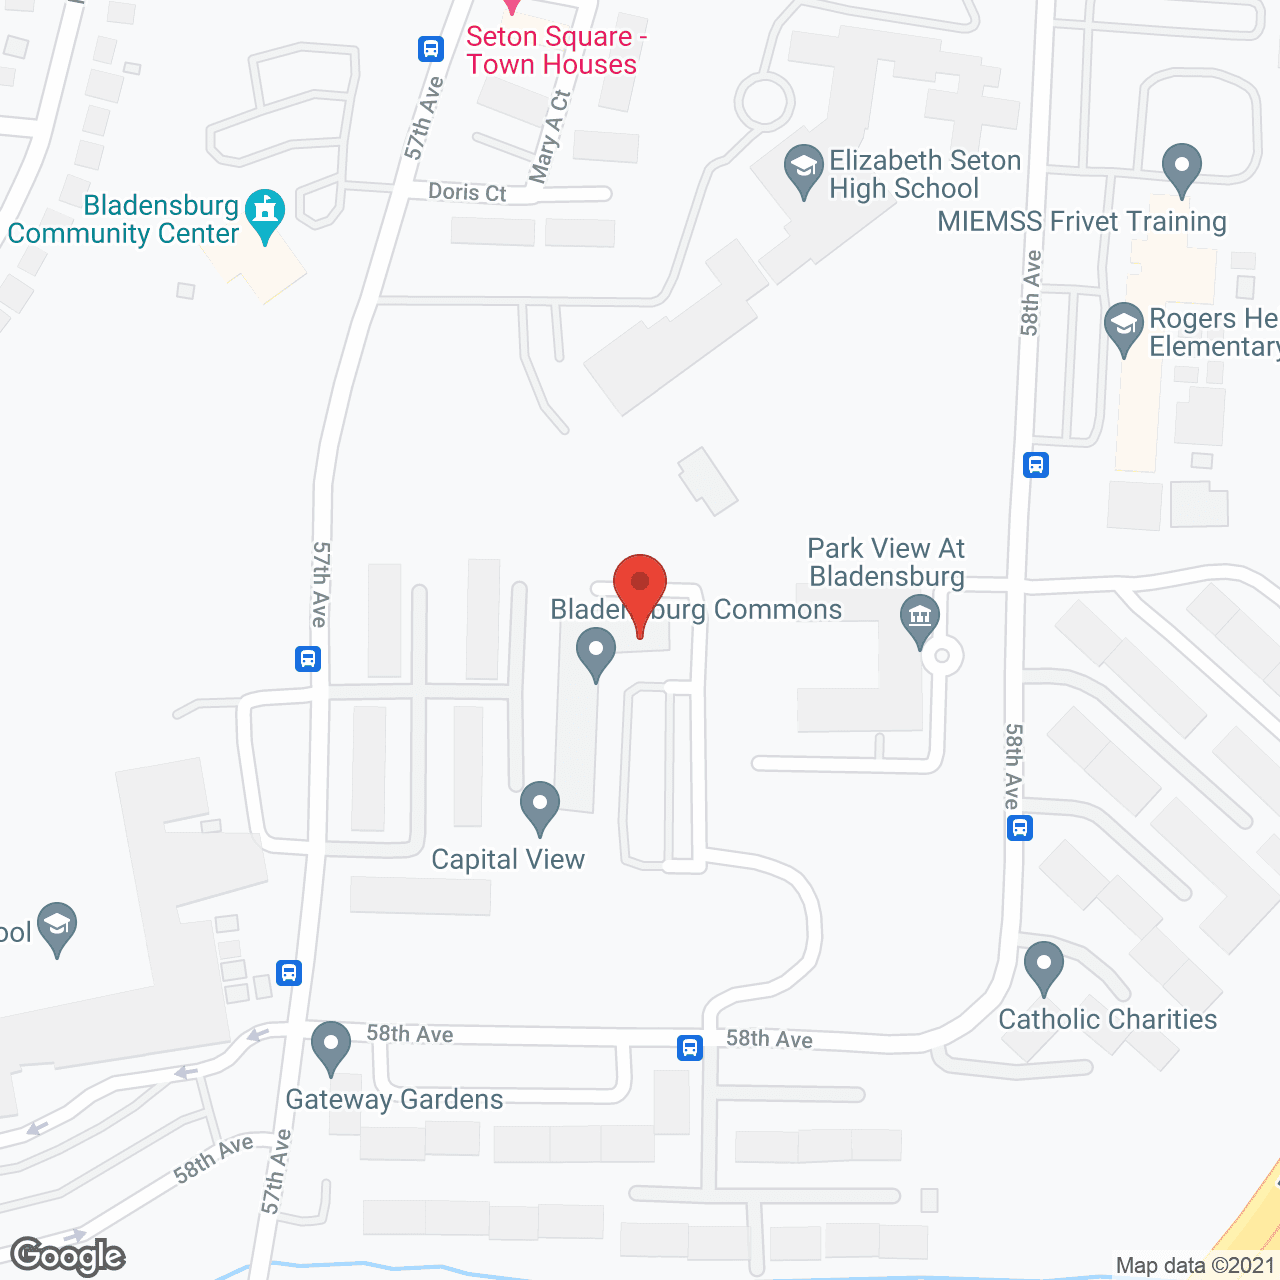 Bladensburg Commons in google map